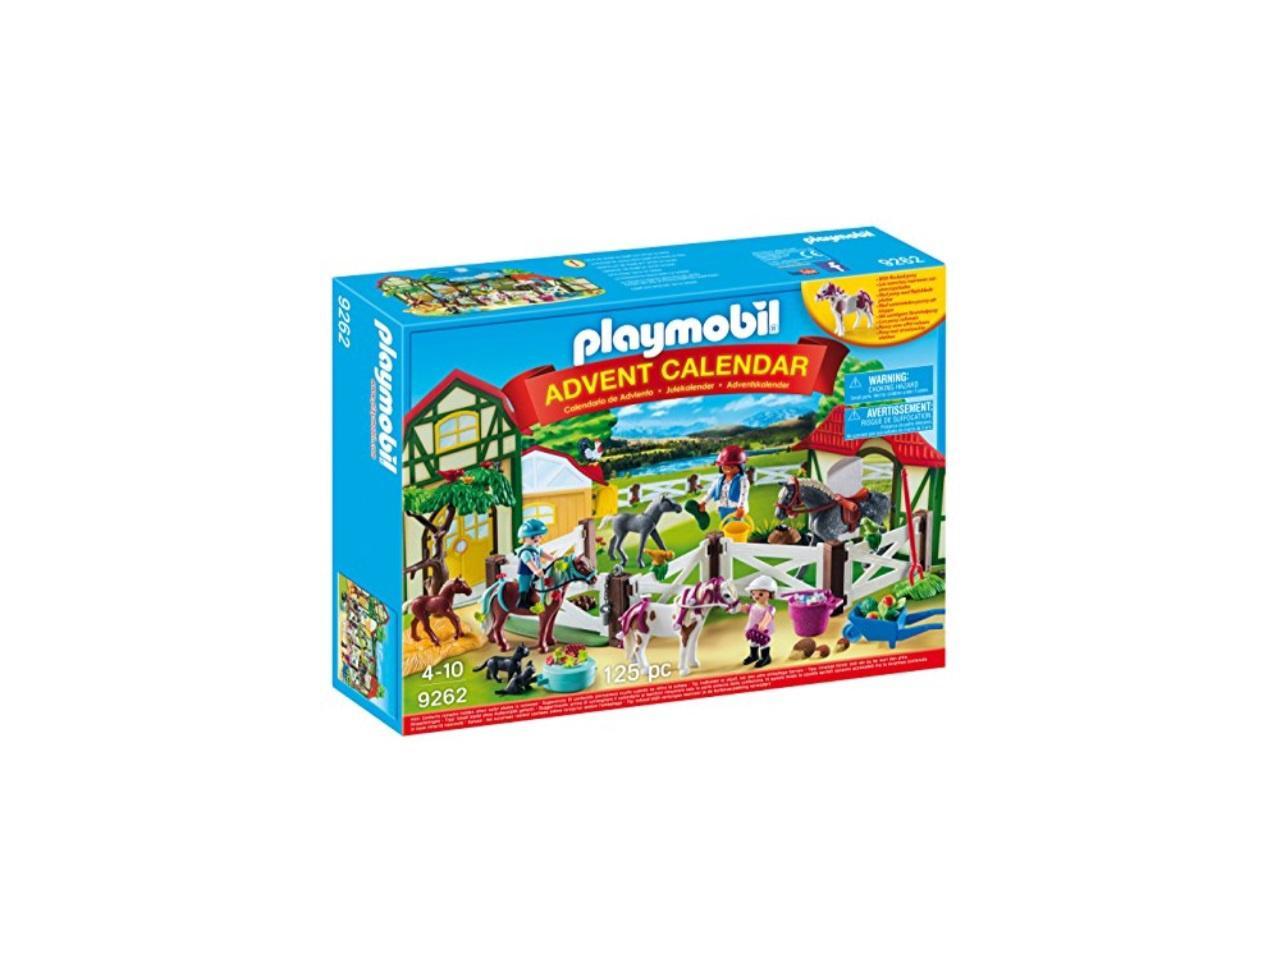 Horse Farm 9262 for Kids 4 to 10 Playmobil Advent Calendar 